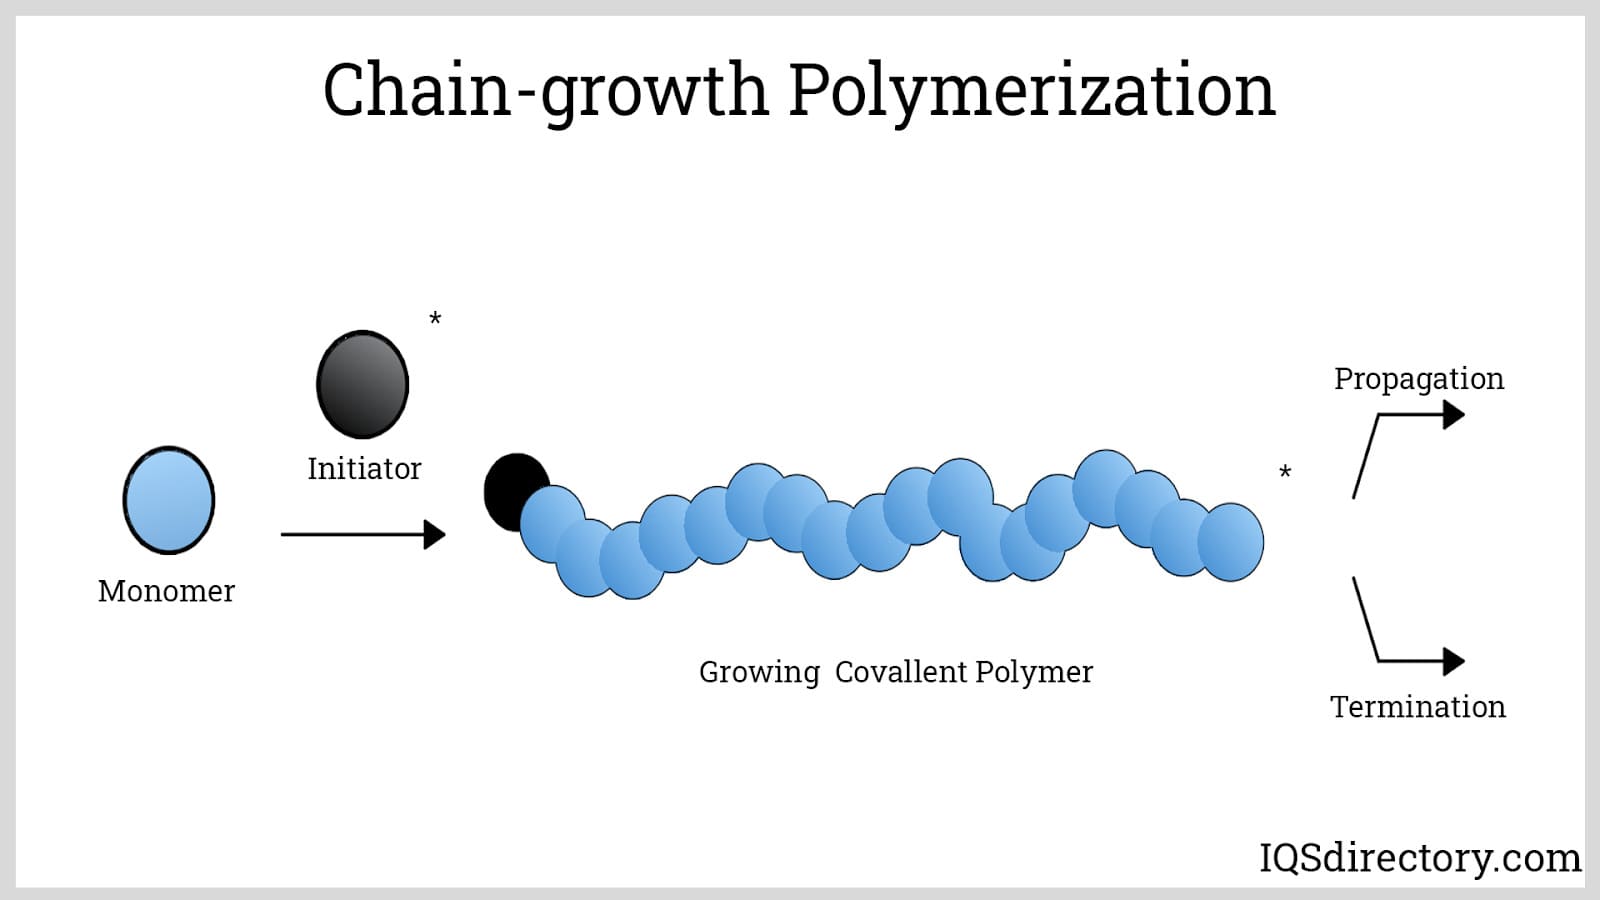 Chain-growth Polymerization